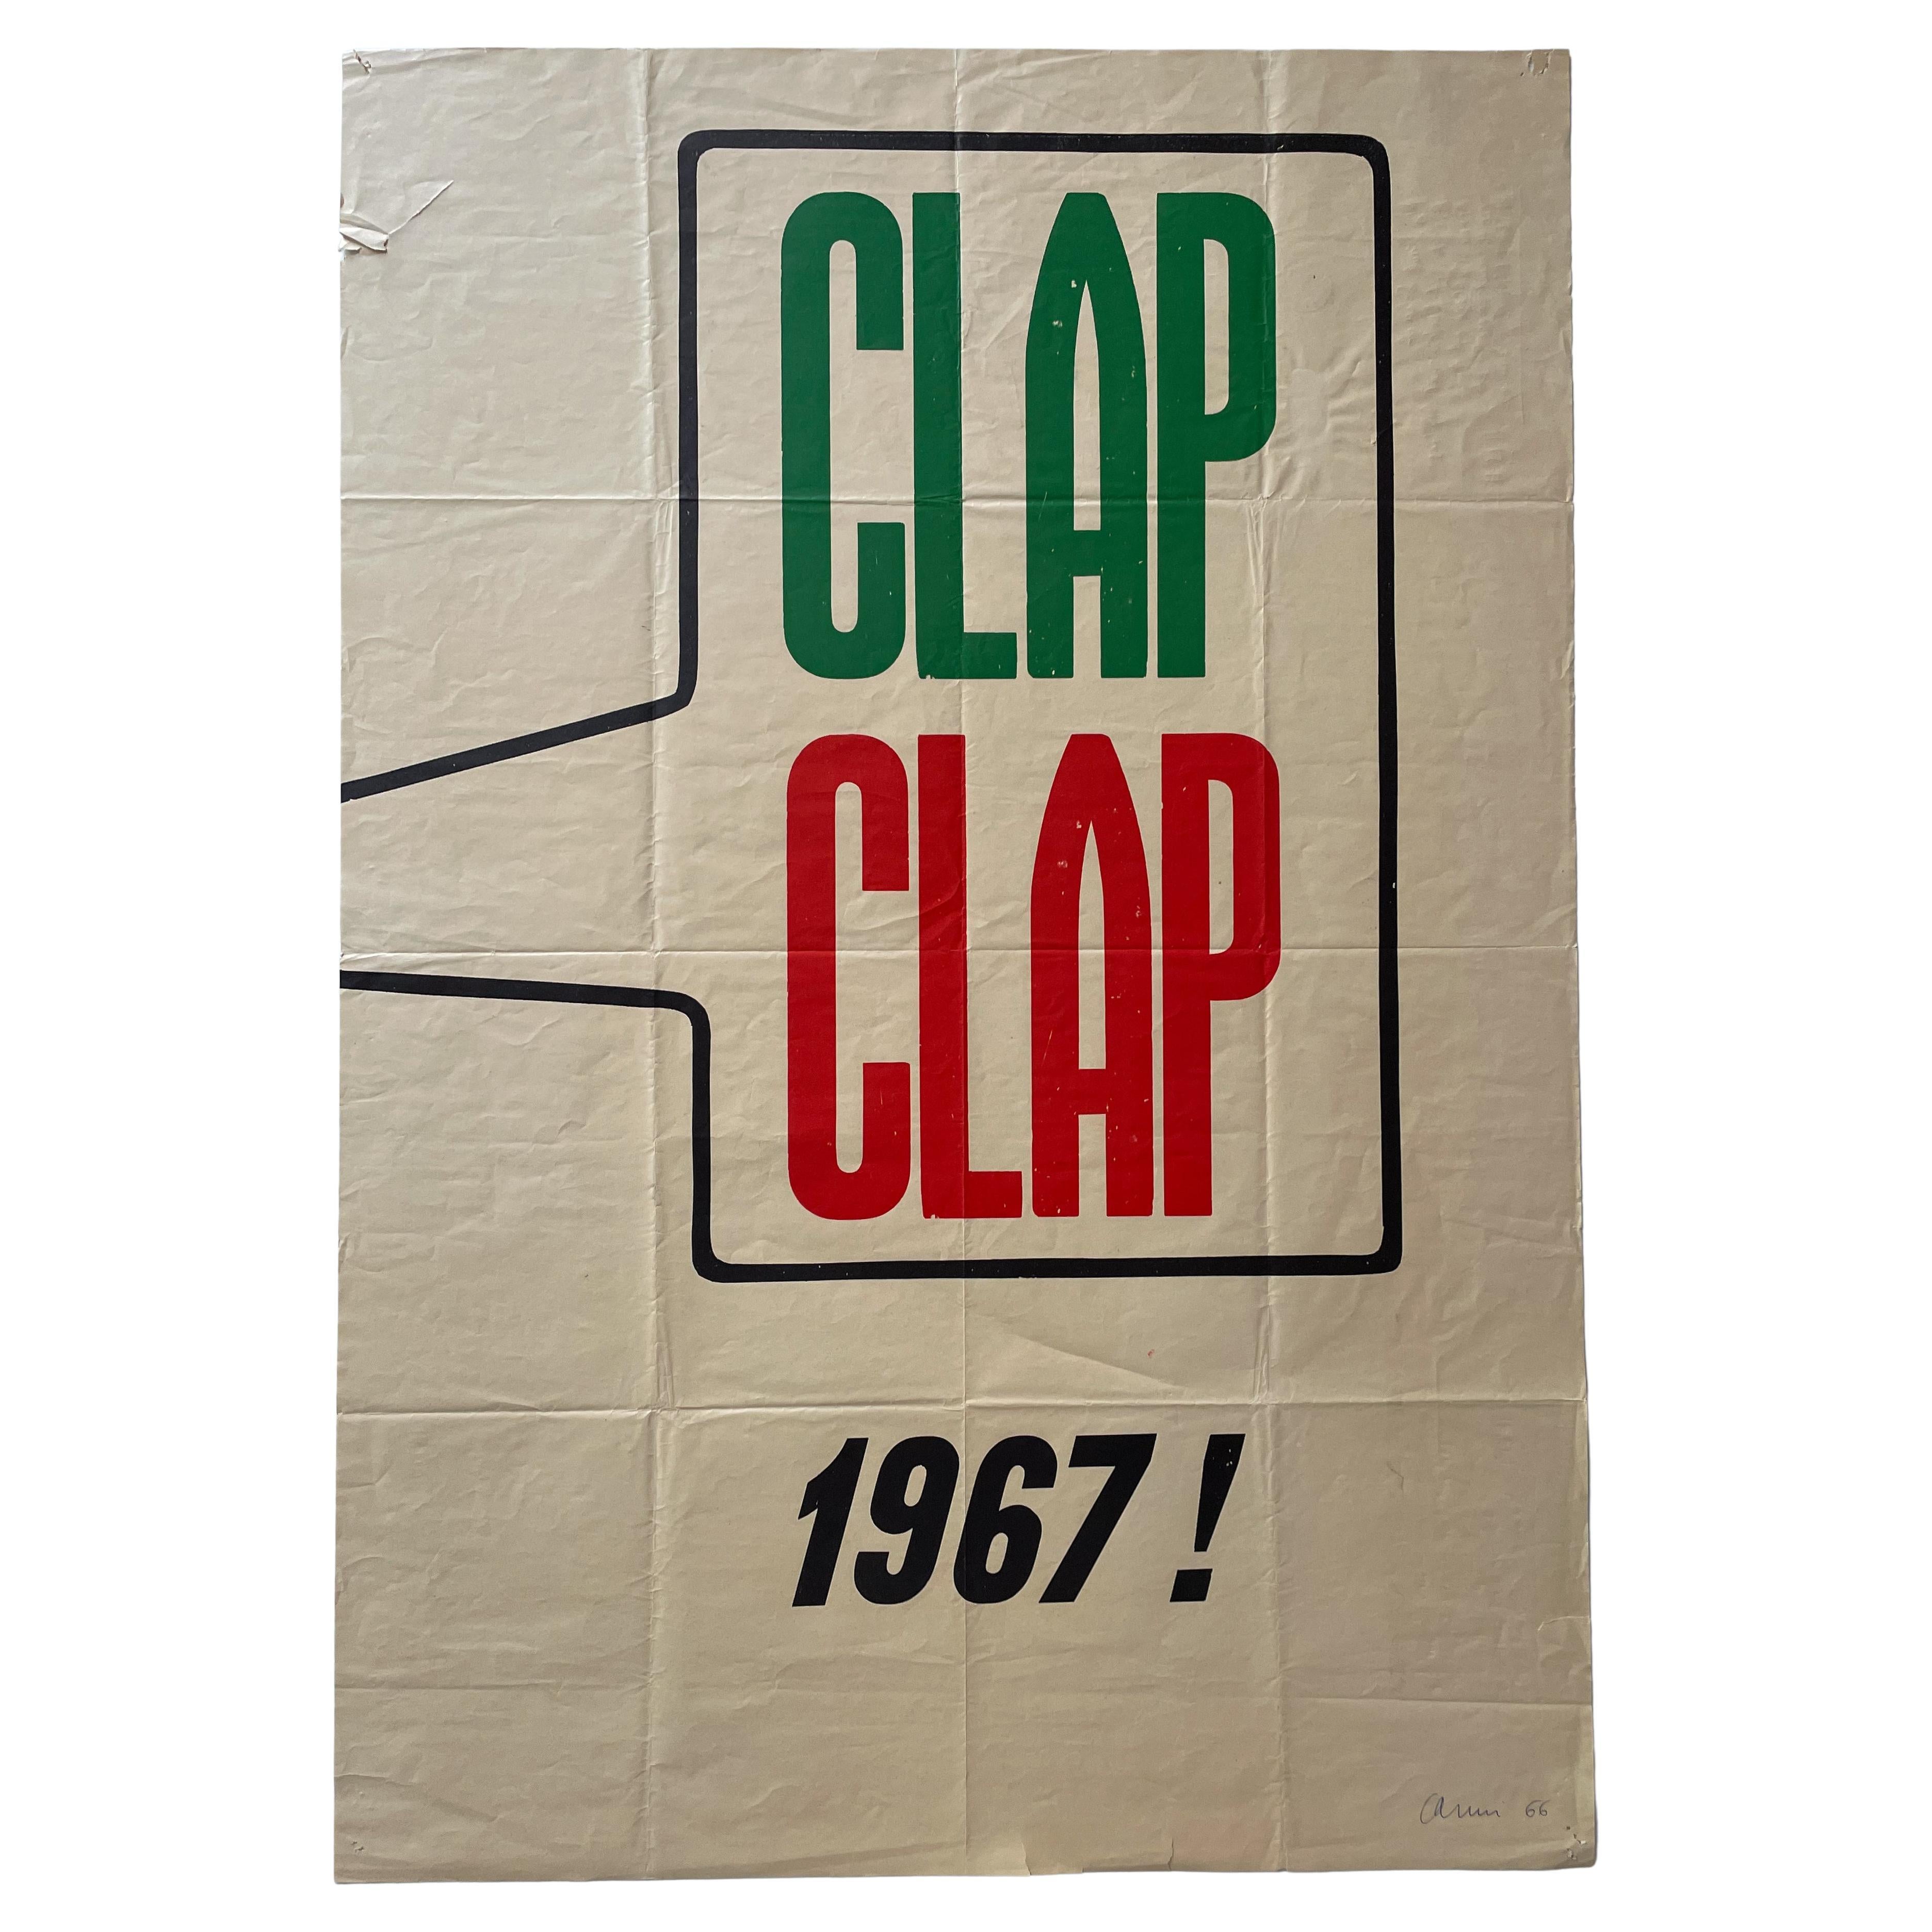 Eugenio Carmi Serigraph "CLAP CLAP" For Sale